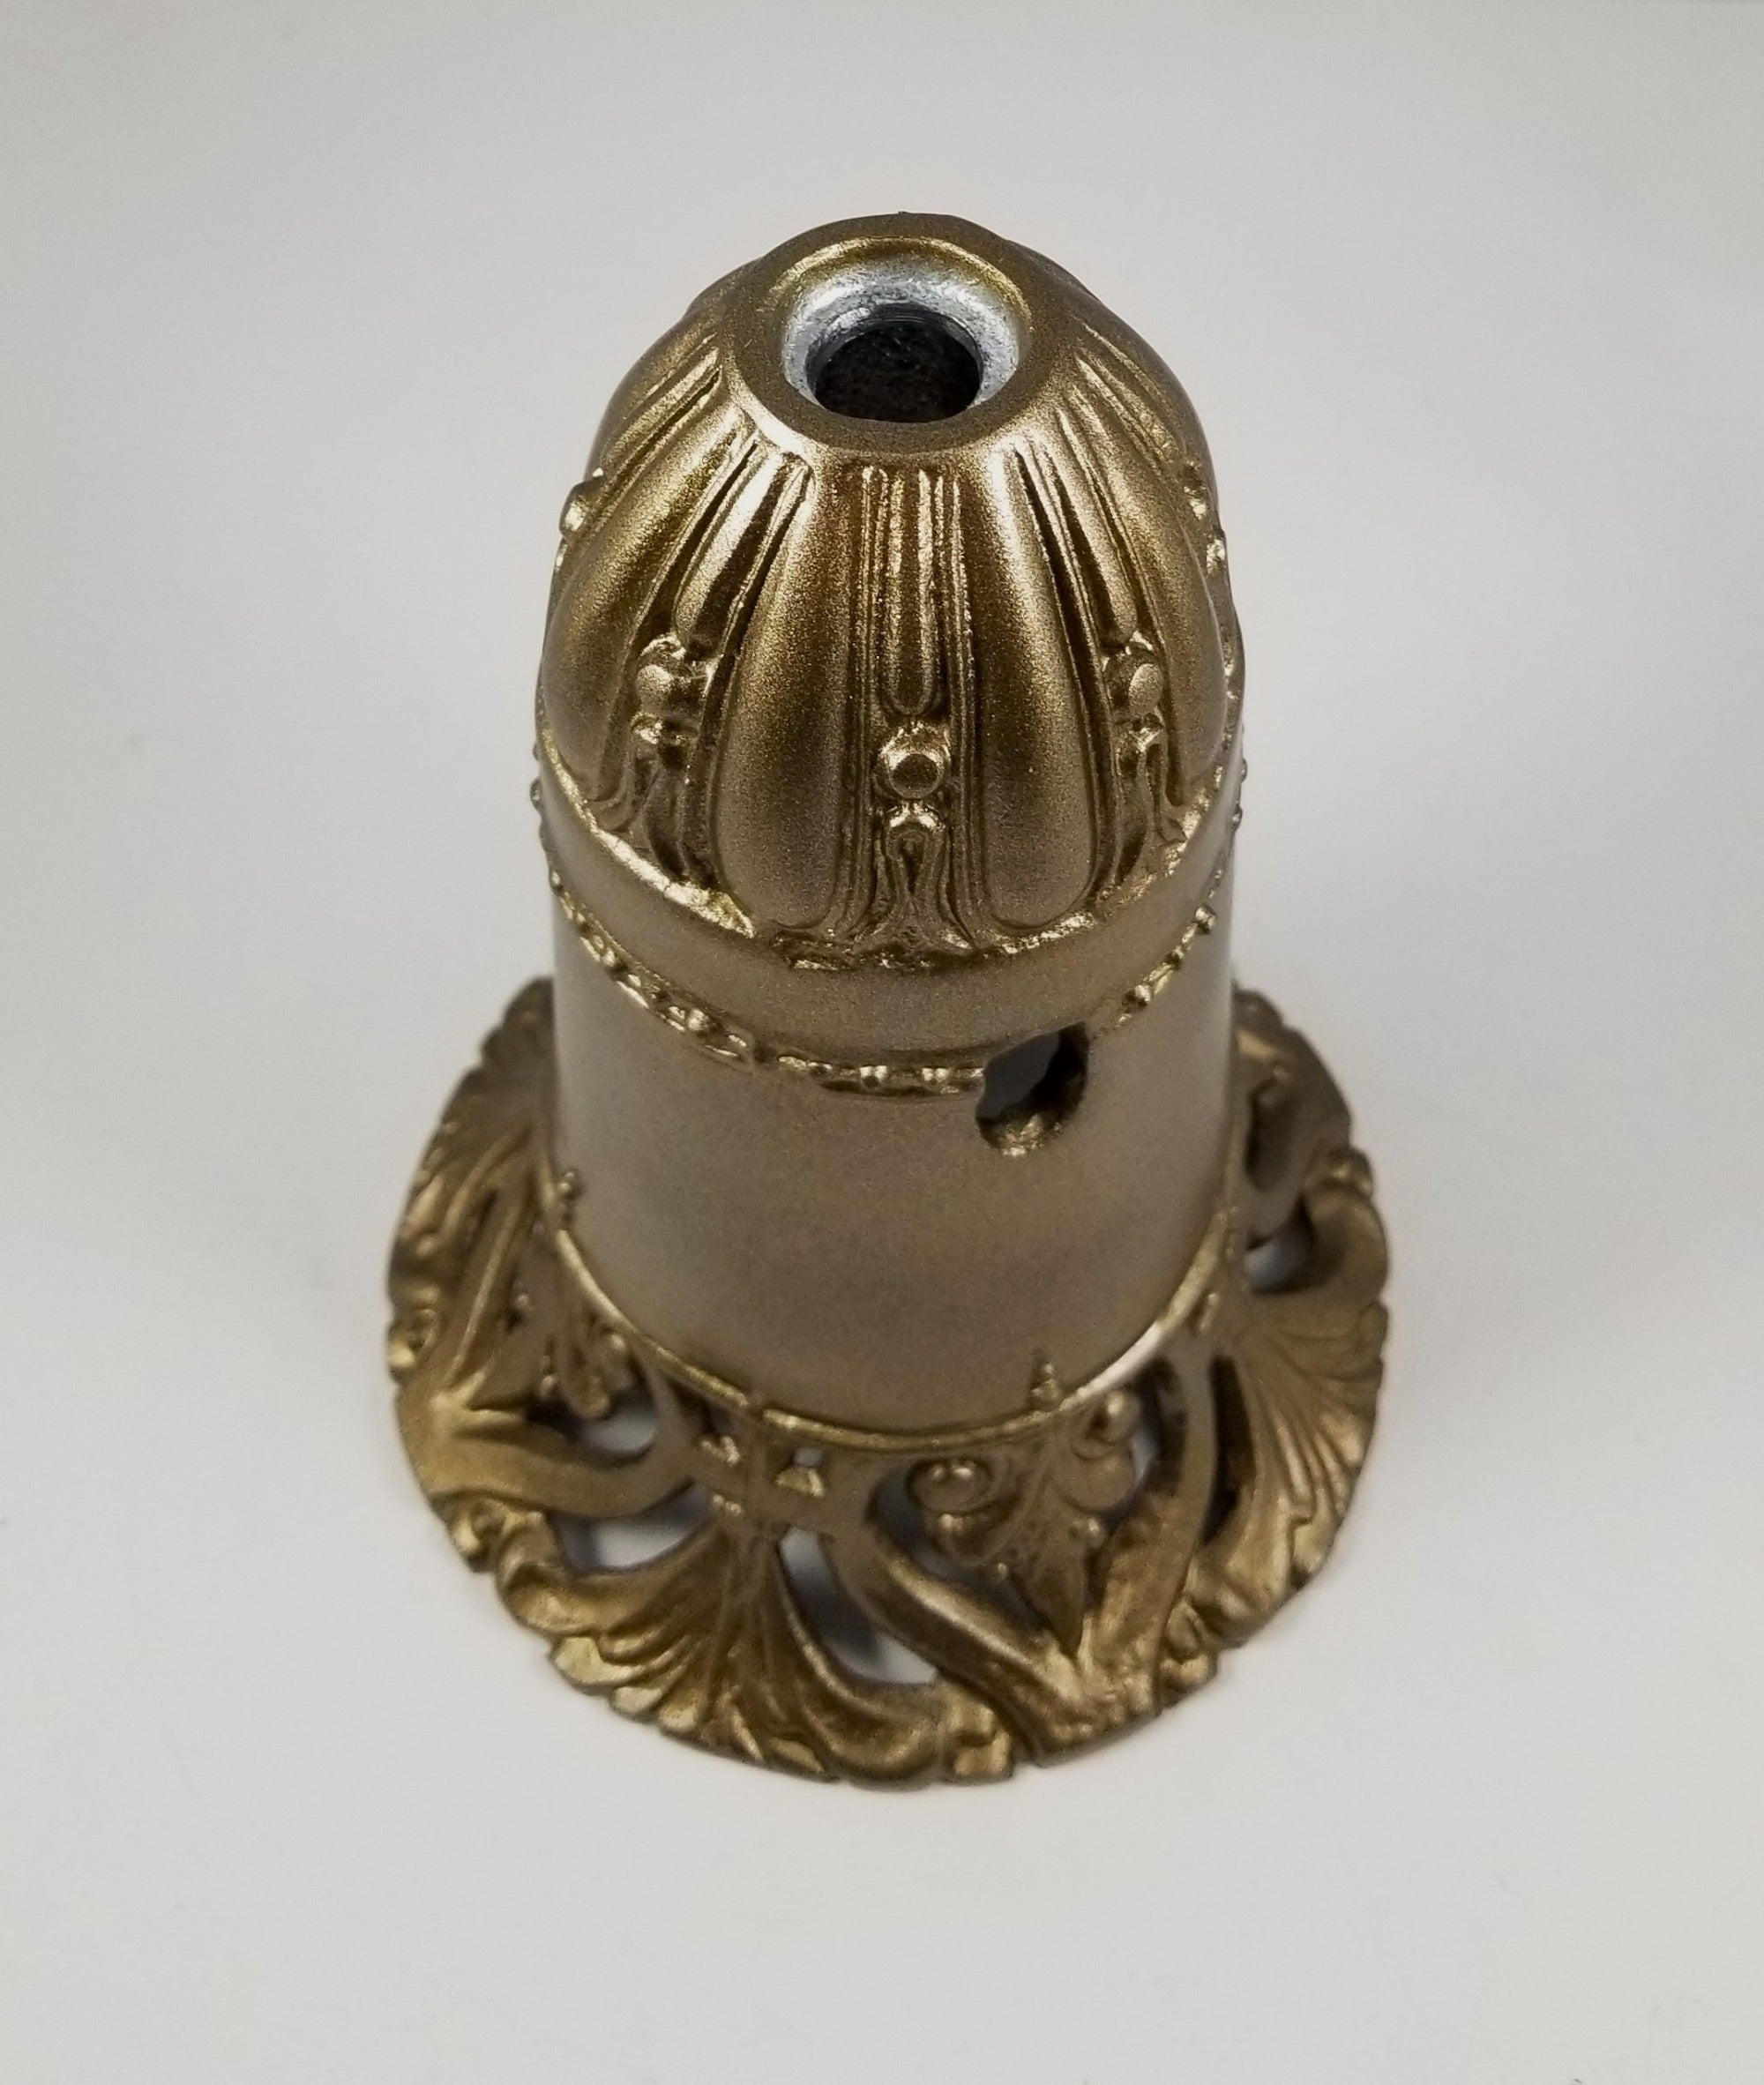 7" Antique Brass Finish White Metal Ornate Torchiere Holder